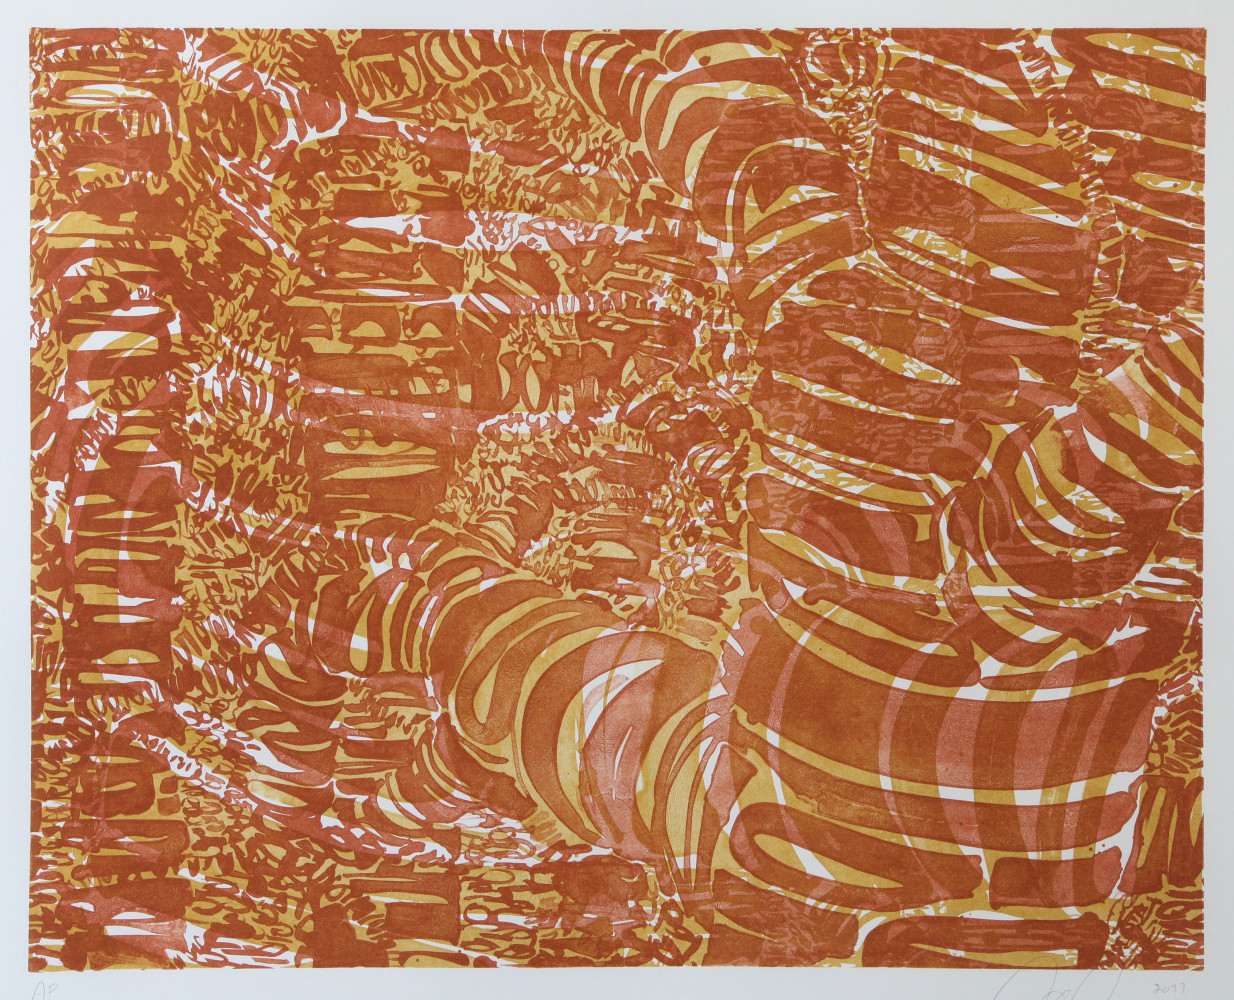 Tony Cragg, ‘Waldzimmer’, 2011, multicolored lithograpy